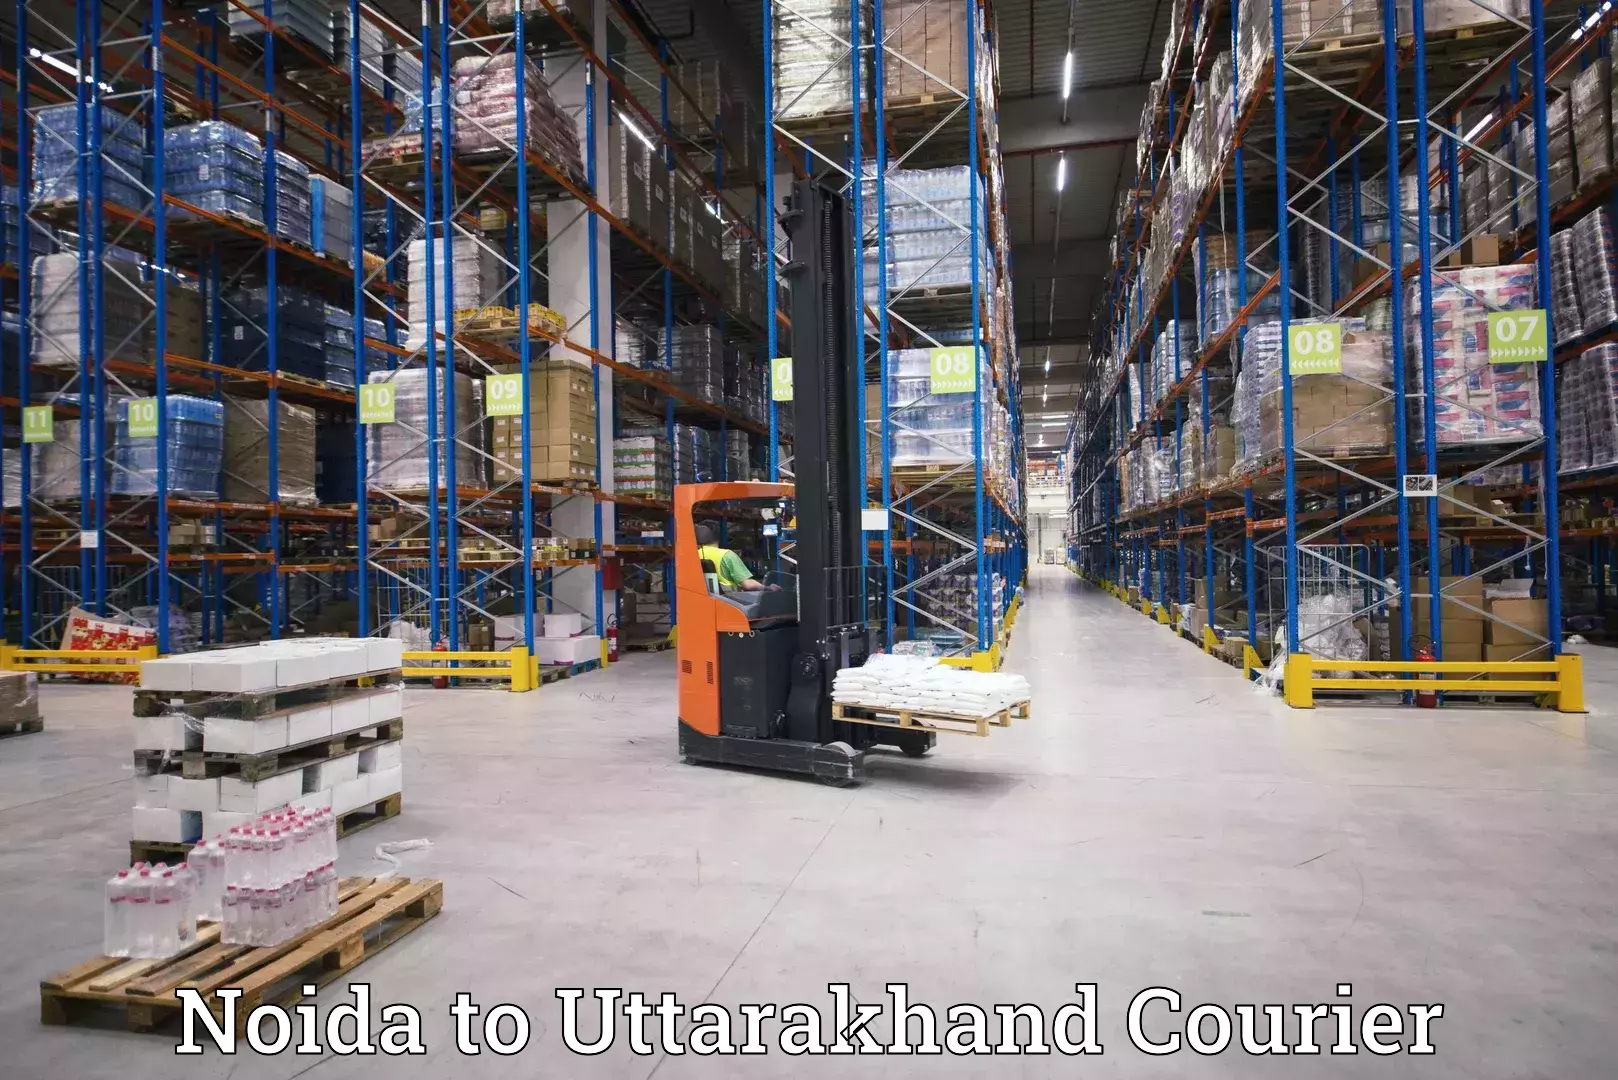 Full-service courier options Noida to Kotdwara